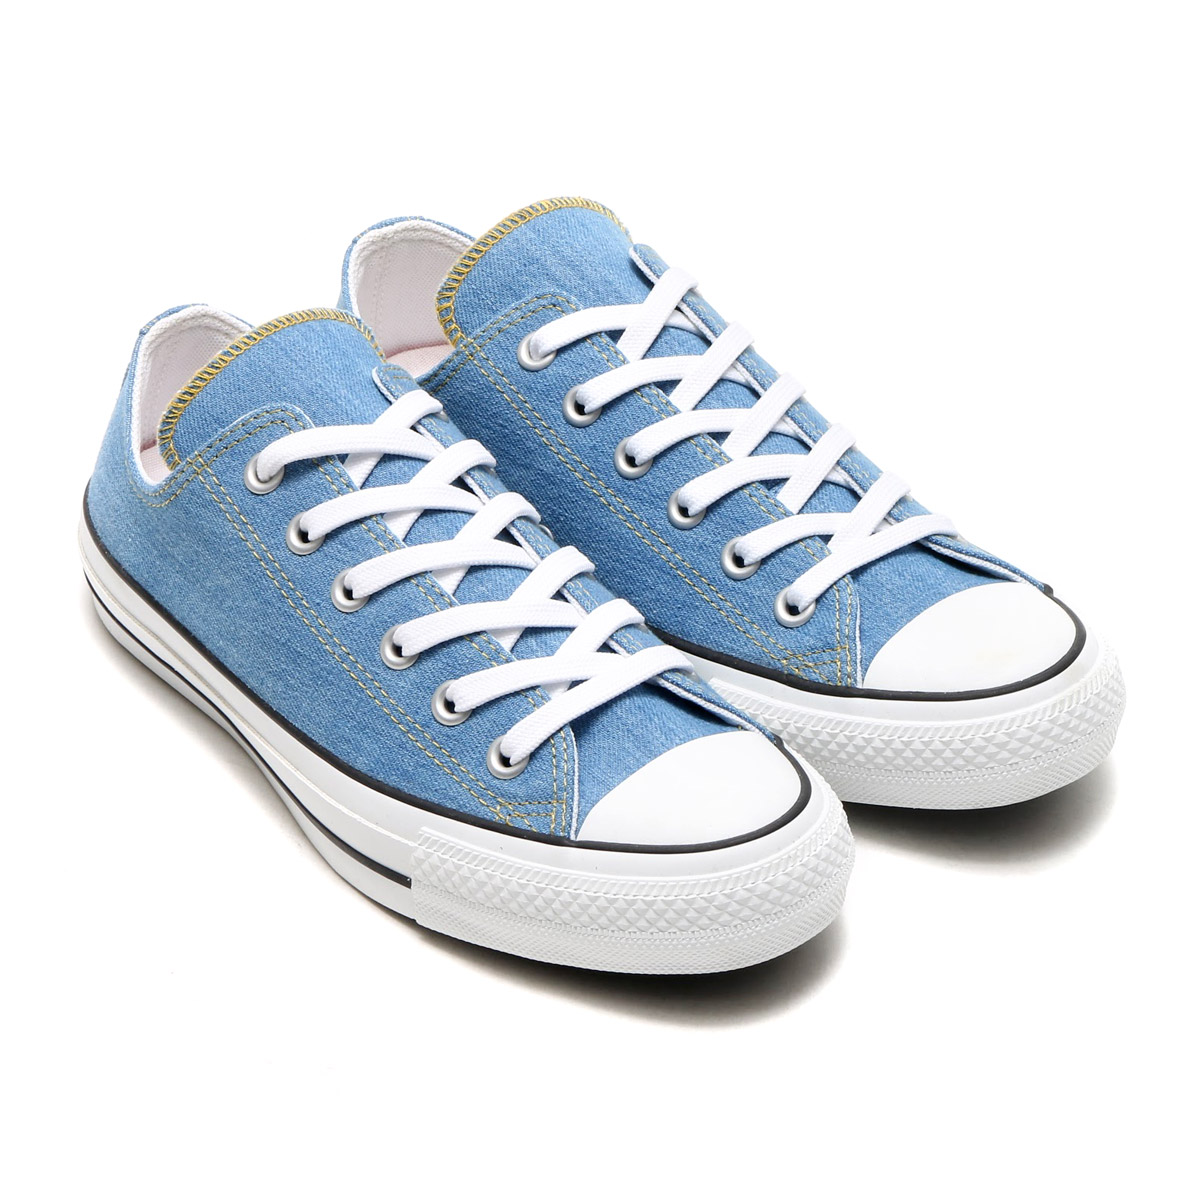 Shop - denim blue converse - OFF 73 